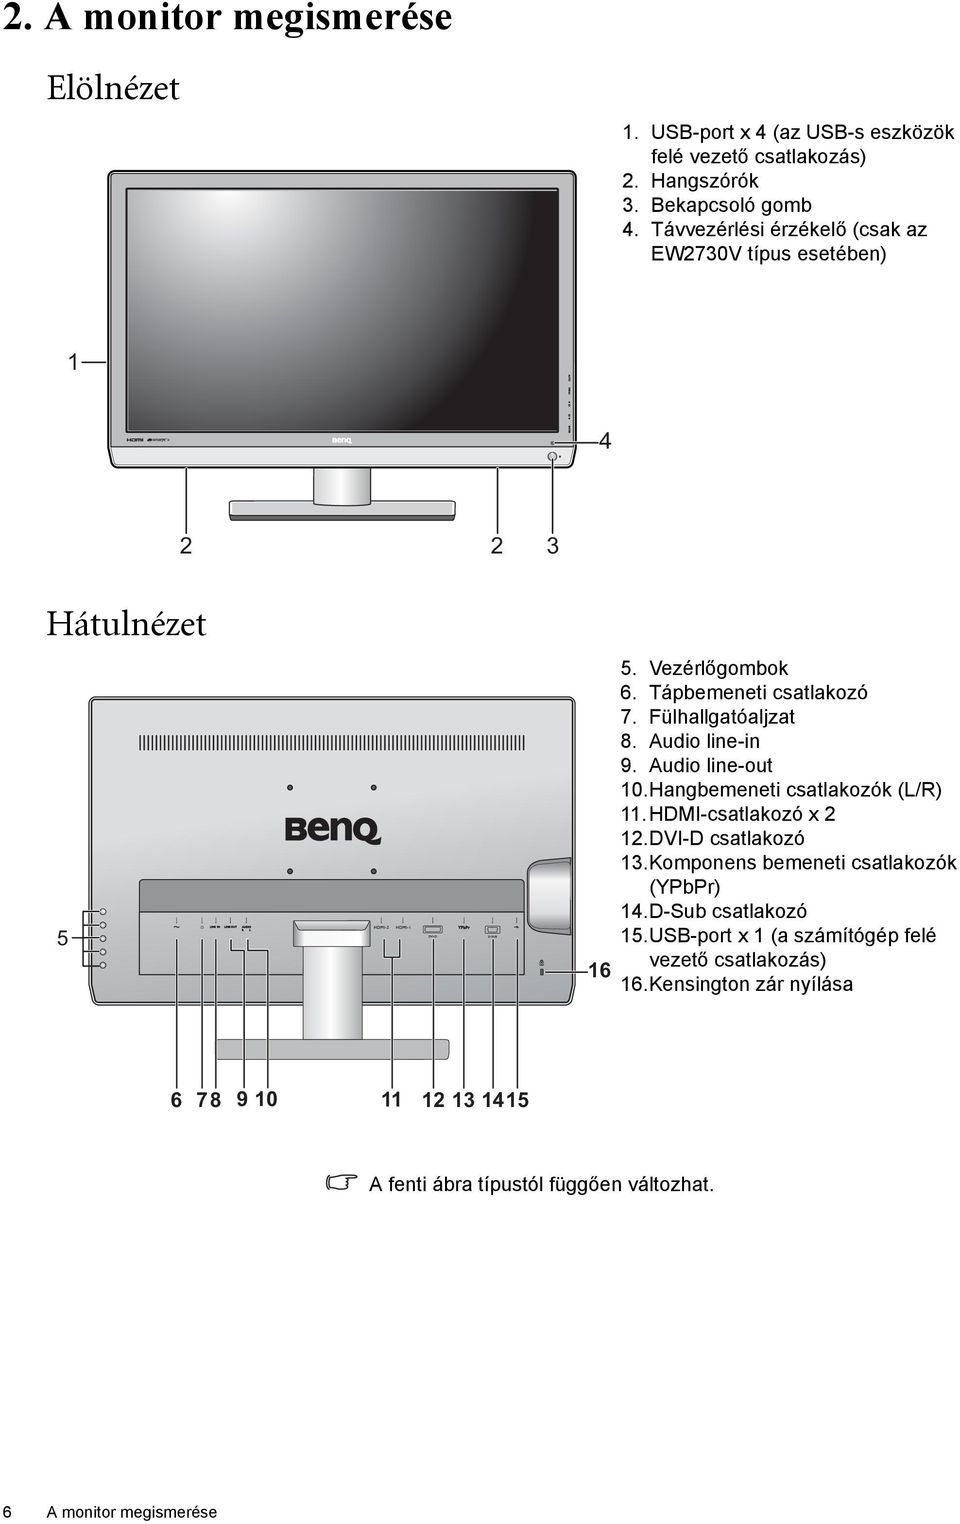 Audio line-in 9. Audio line-out 10.Hangbemeneti csatlakozók (L/R) 11.HDMI-csatlakozó x 2 12.DVI-D csatlakozó 13.Komponens bemeneti csatlakozók (YPbPr) 14.